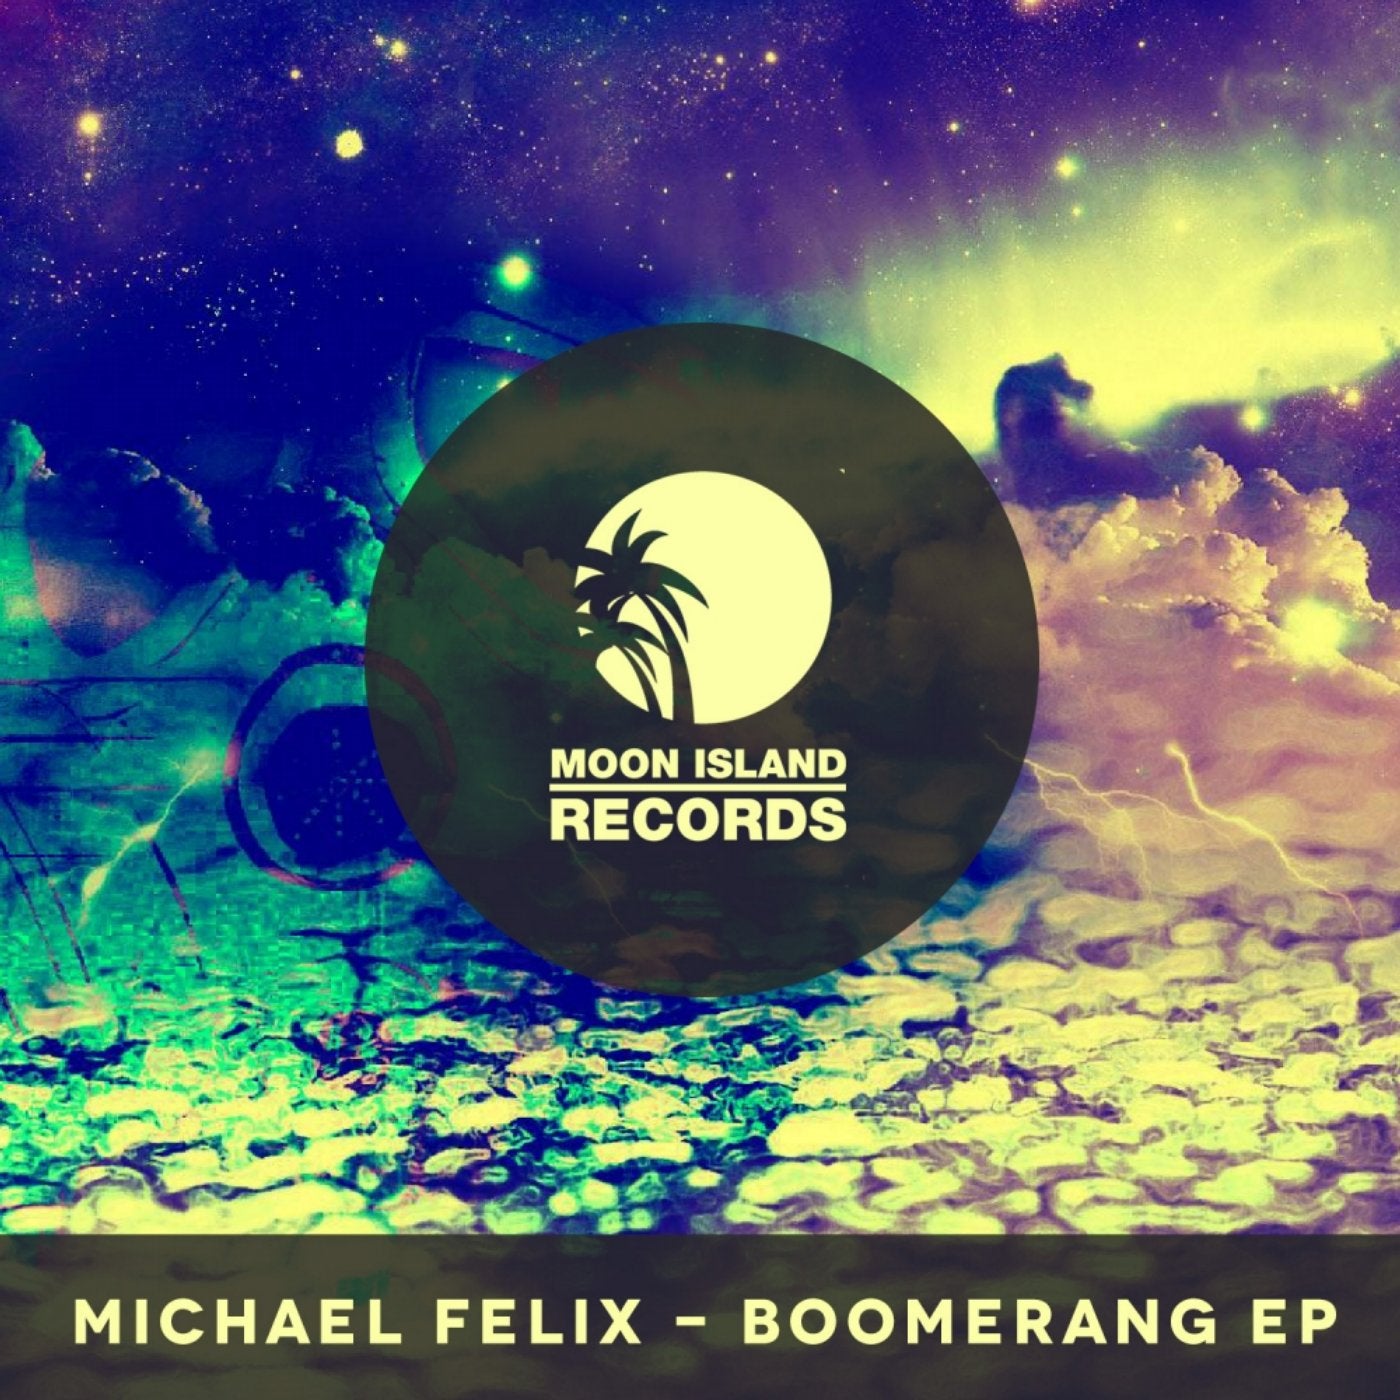 Boomerang EP